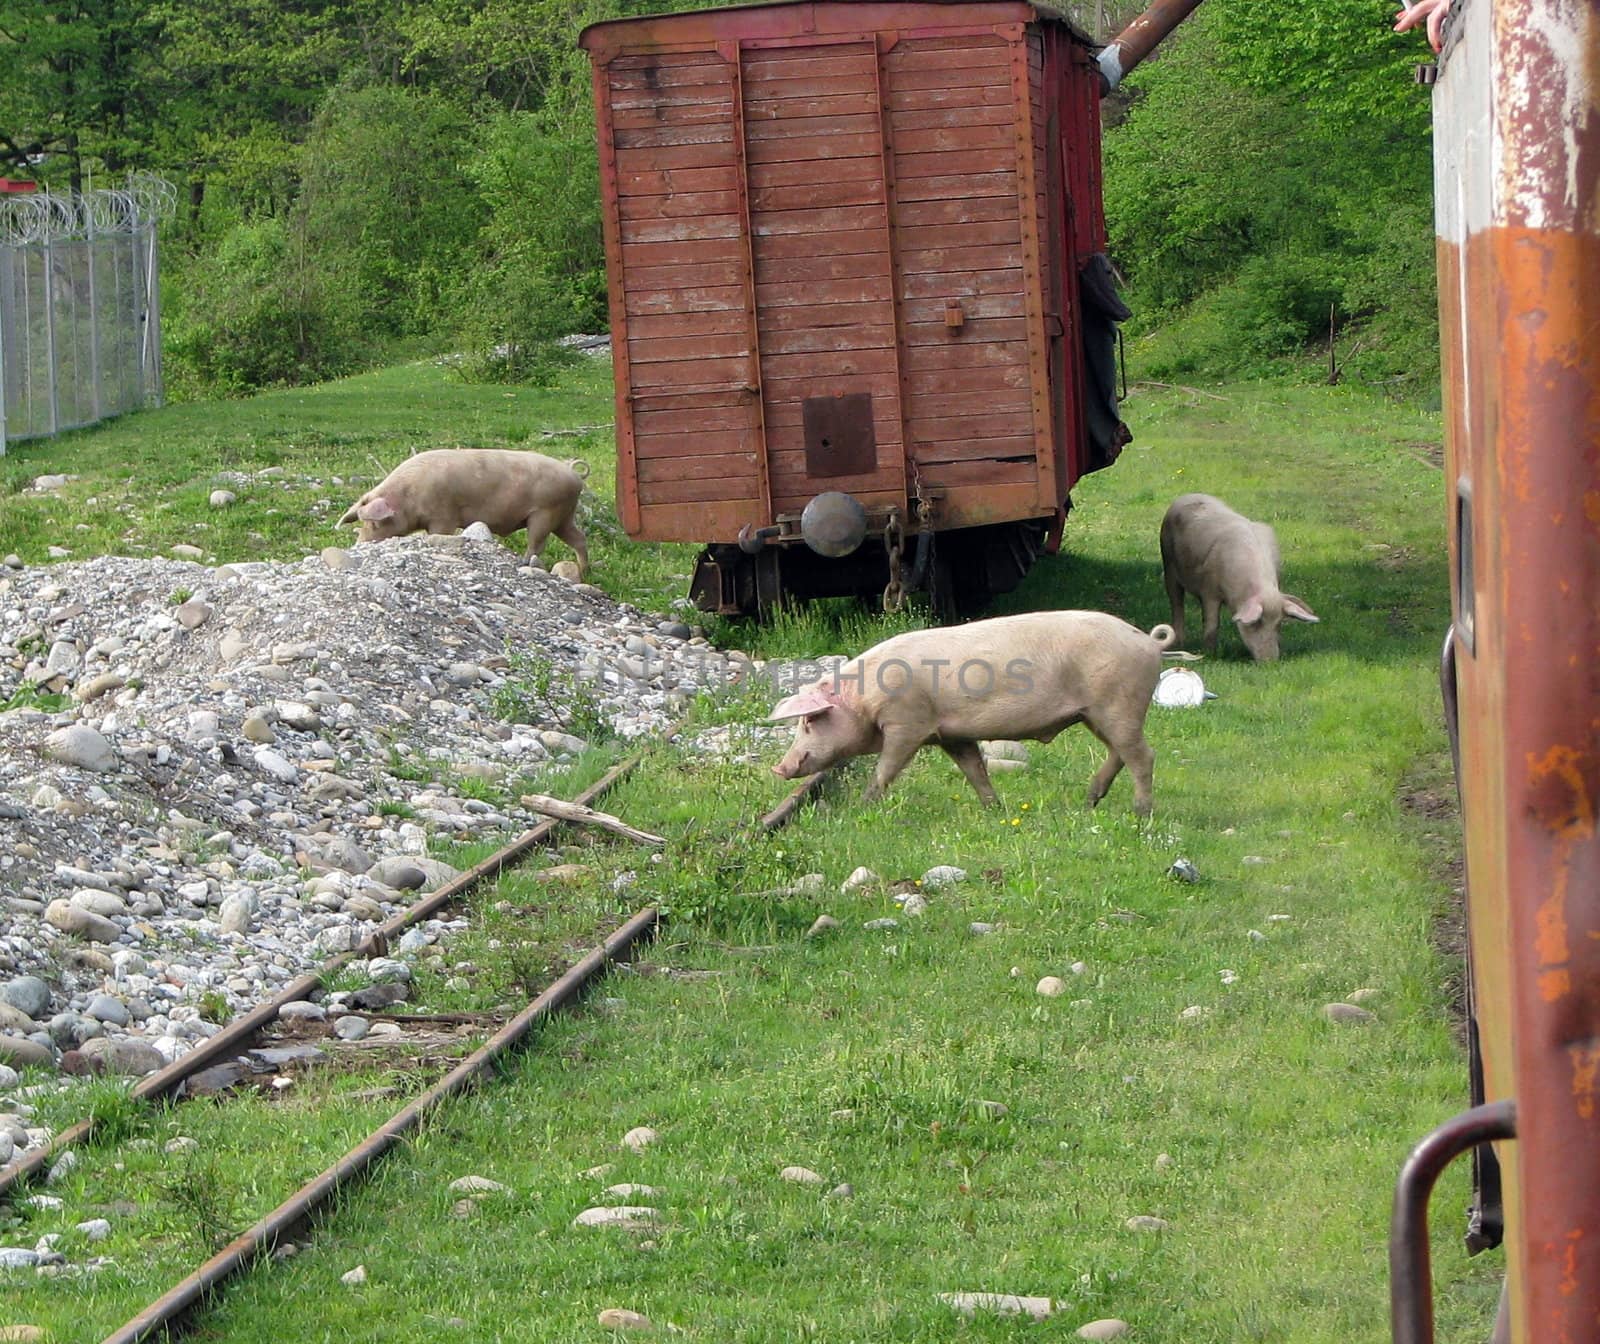 Pigs on the railway tracks.